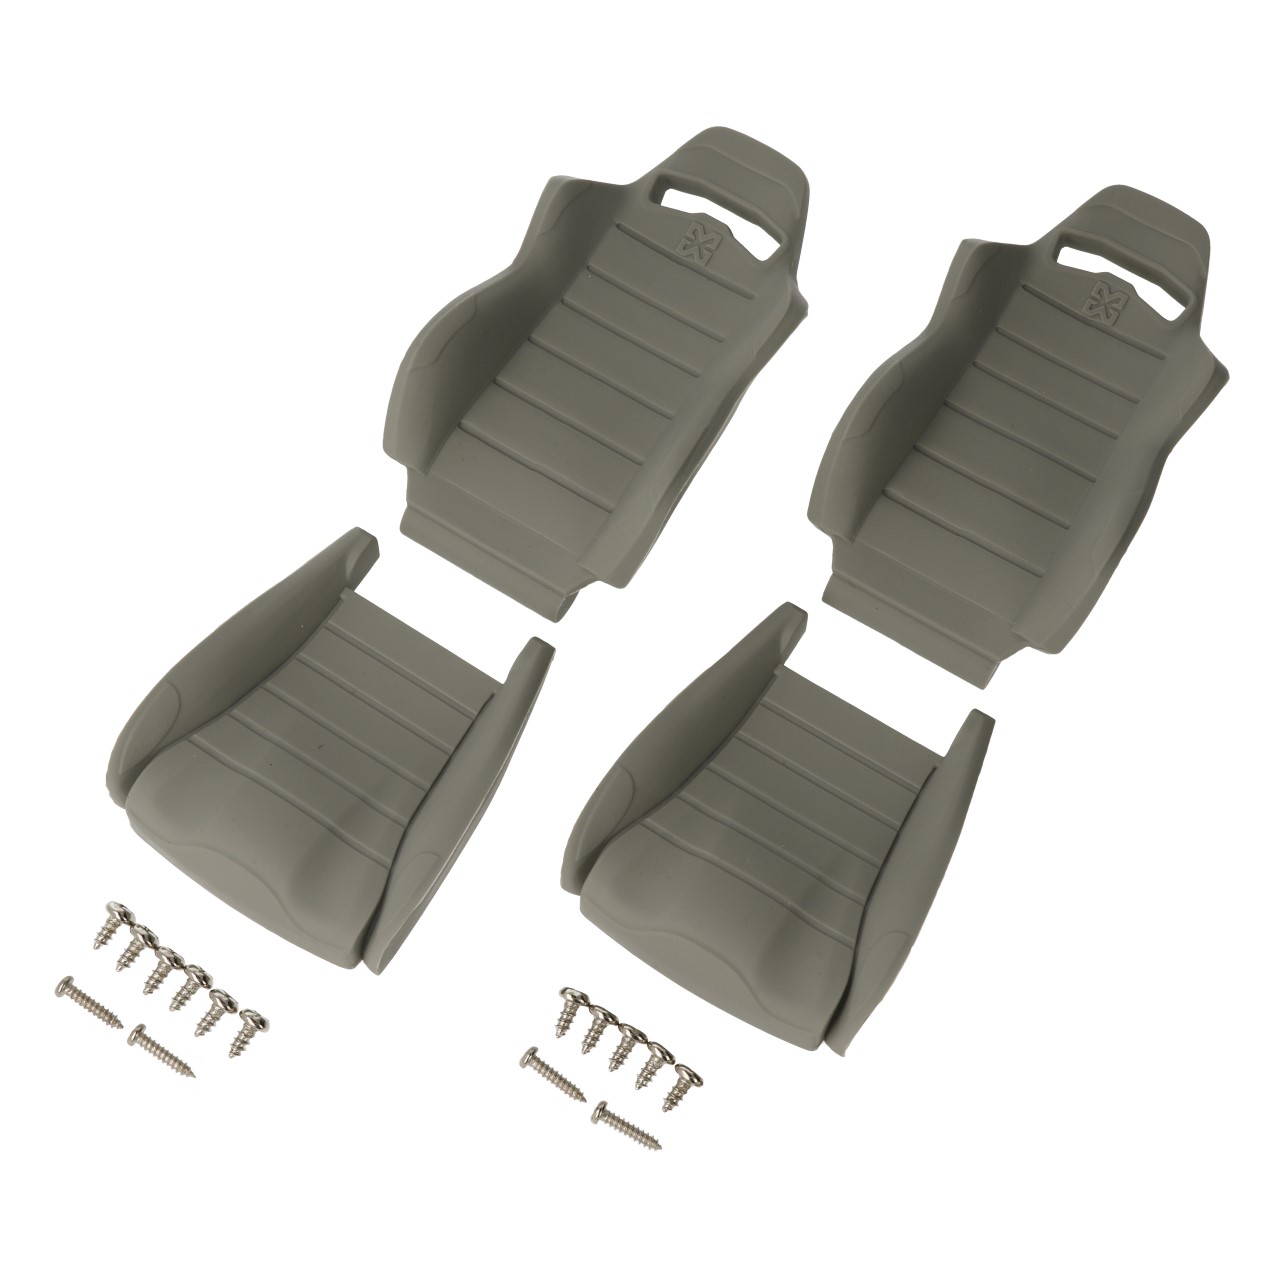 Kayhobbies - Onlineshop für RC Cars - Drift - Crawler - Schalensitz Set  Gummi (2 Stück)